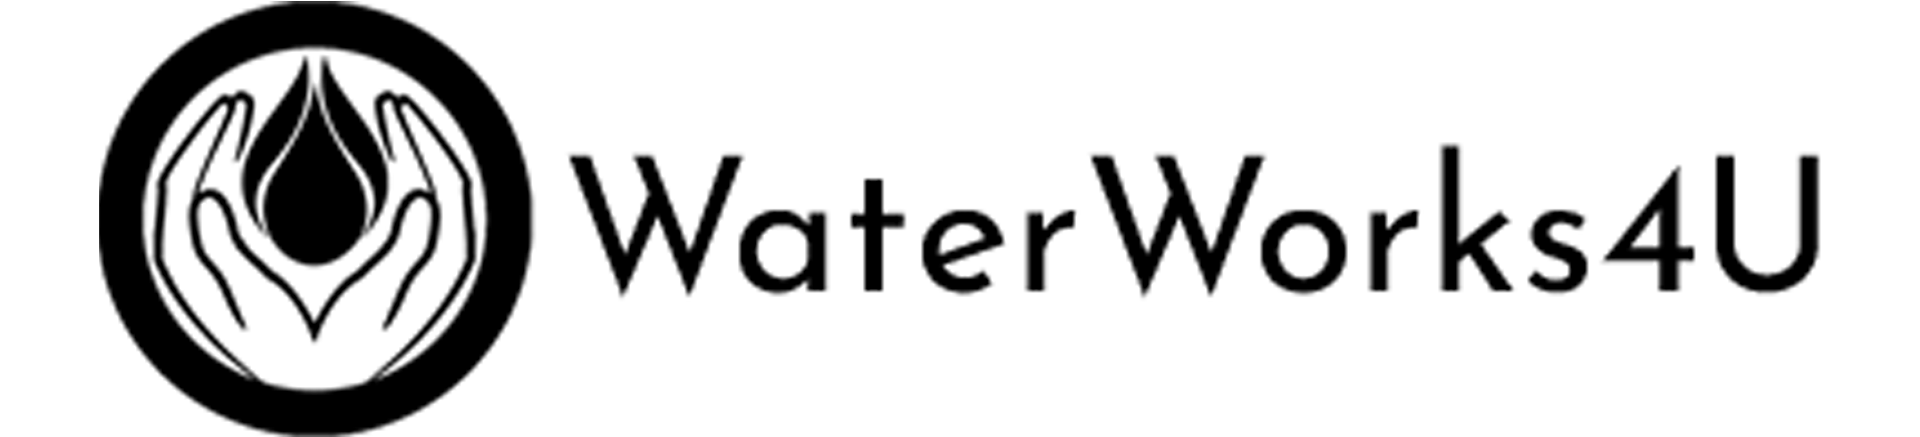 WaterWorks4U Black Logo